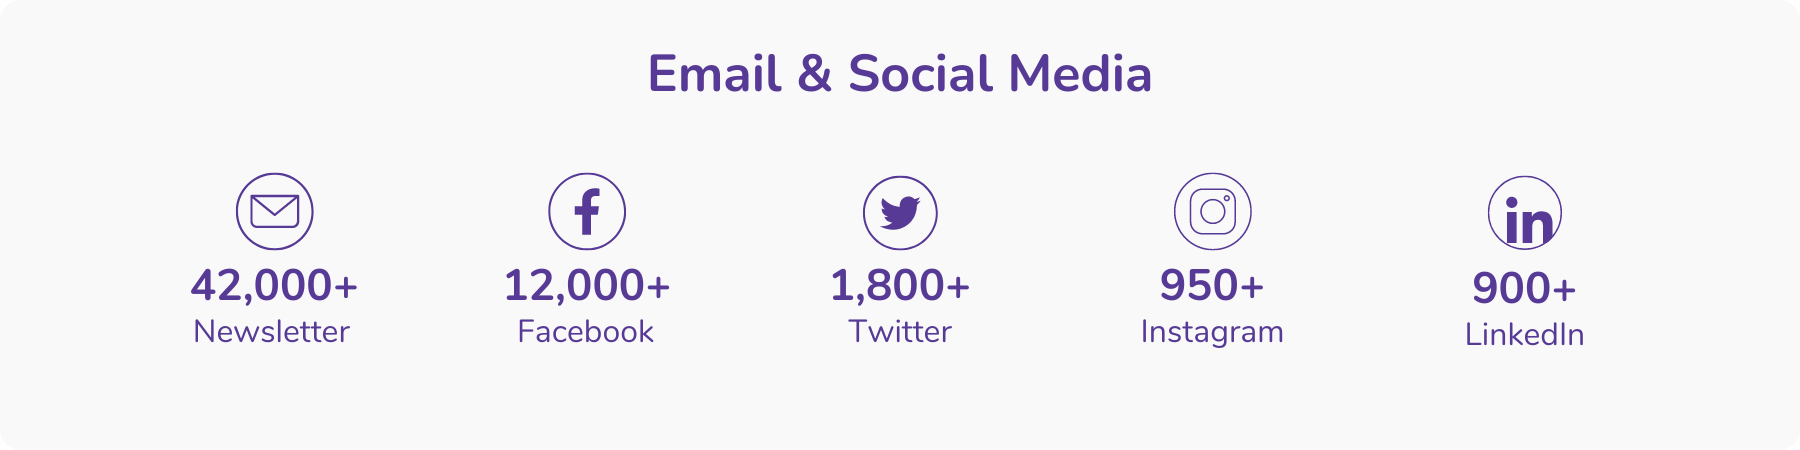 Email & Social Media Statistics - 42000+ newsletter, 12000 Facebook, 1800+ Twitter, 950+ Instagram, 900+ LinkedIn